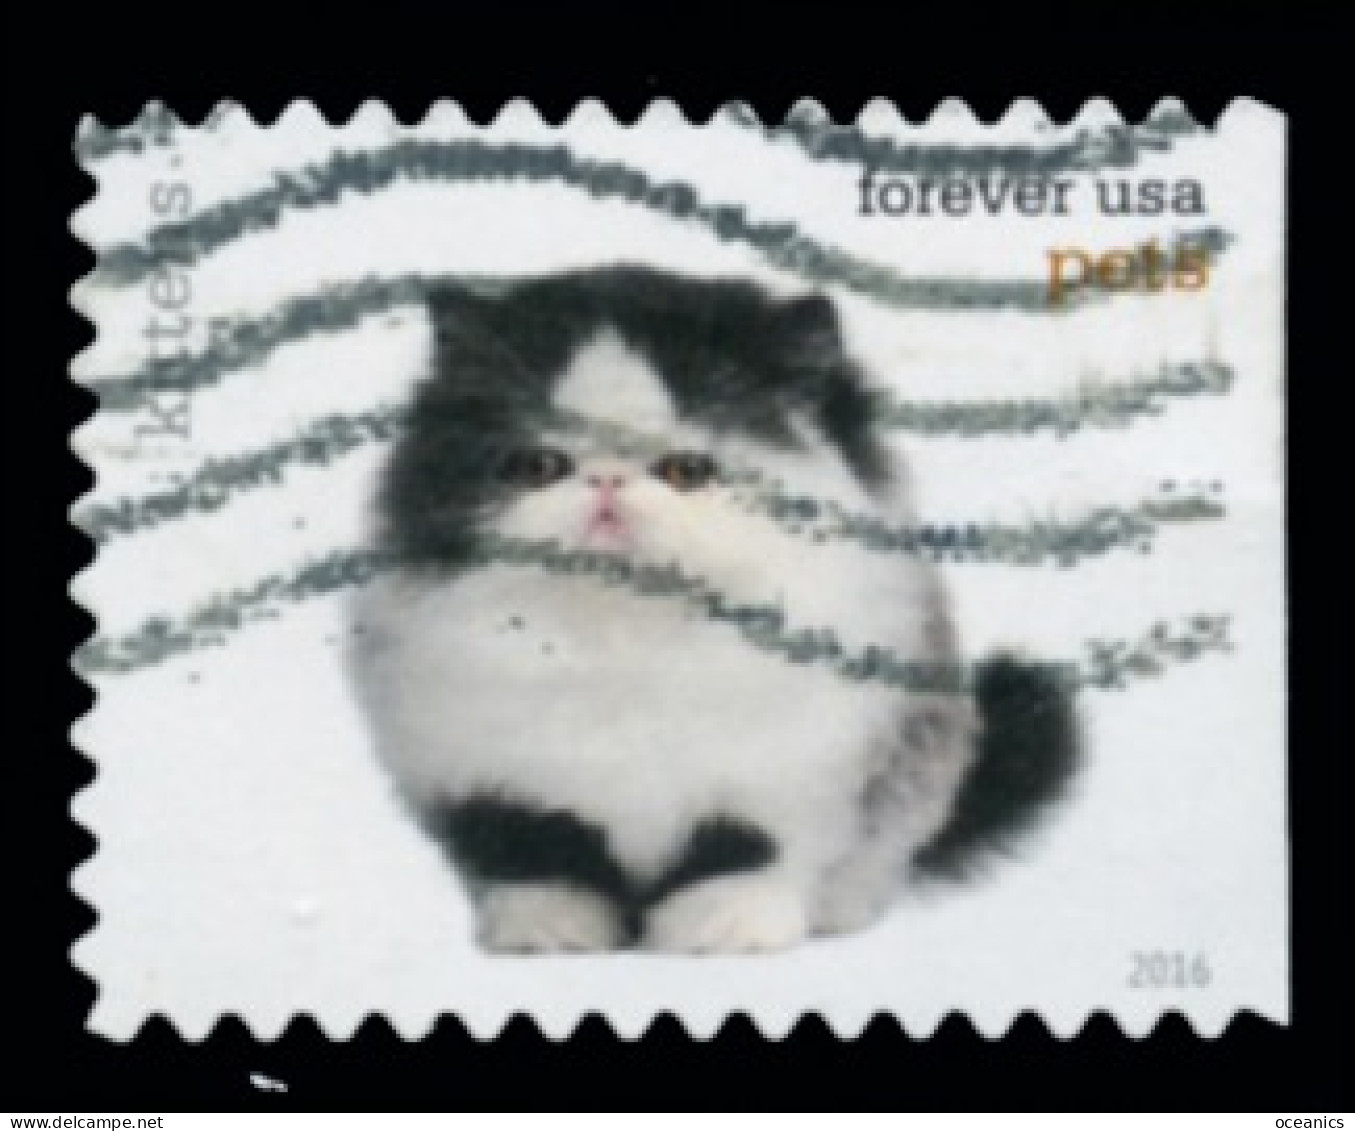 Etats-Unis / United States (Scott No.5111 - Pets) (o) - Used Stamps